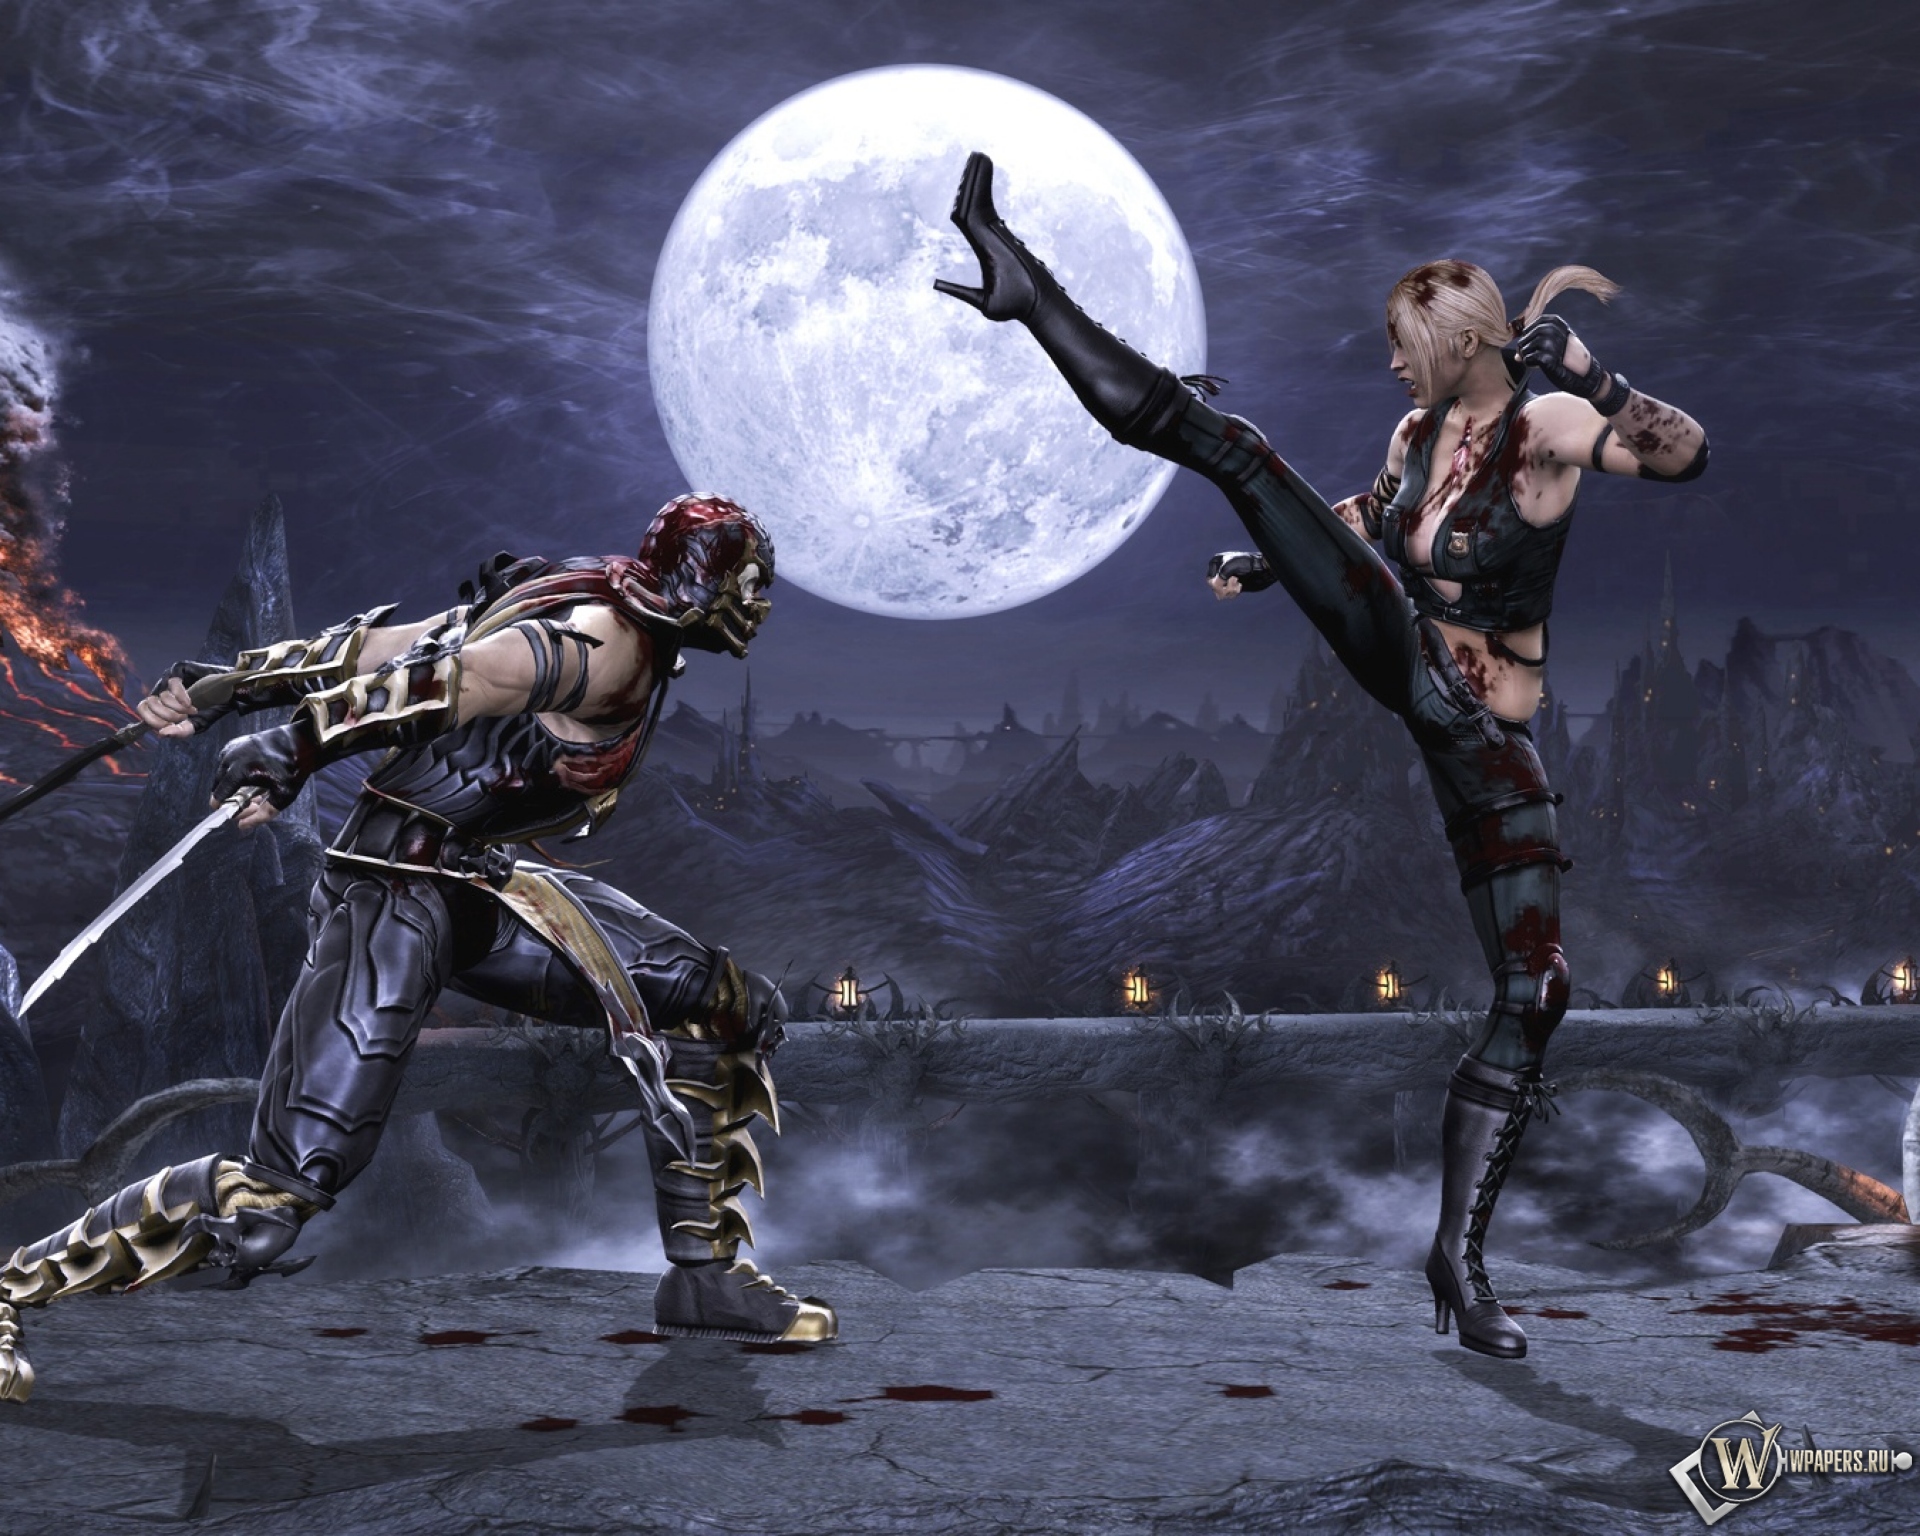 Mortal kombat komplete. Mortal Kombat игра 2011. MK Komplete Edition Xbox 360. Mortal Kombat 2011 Скорпион. Mortal Kombat Komplete Edition.